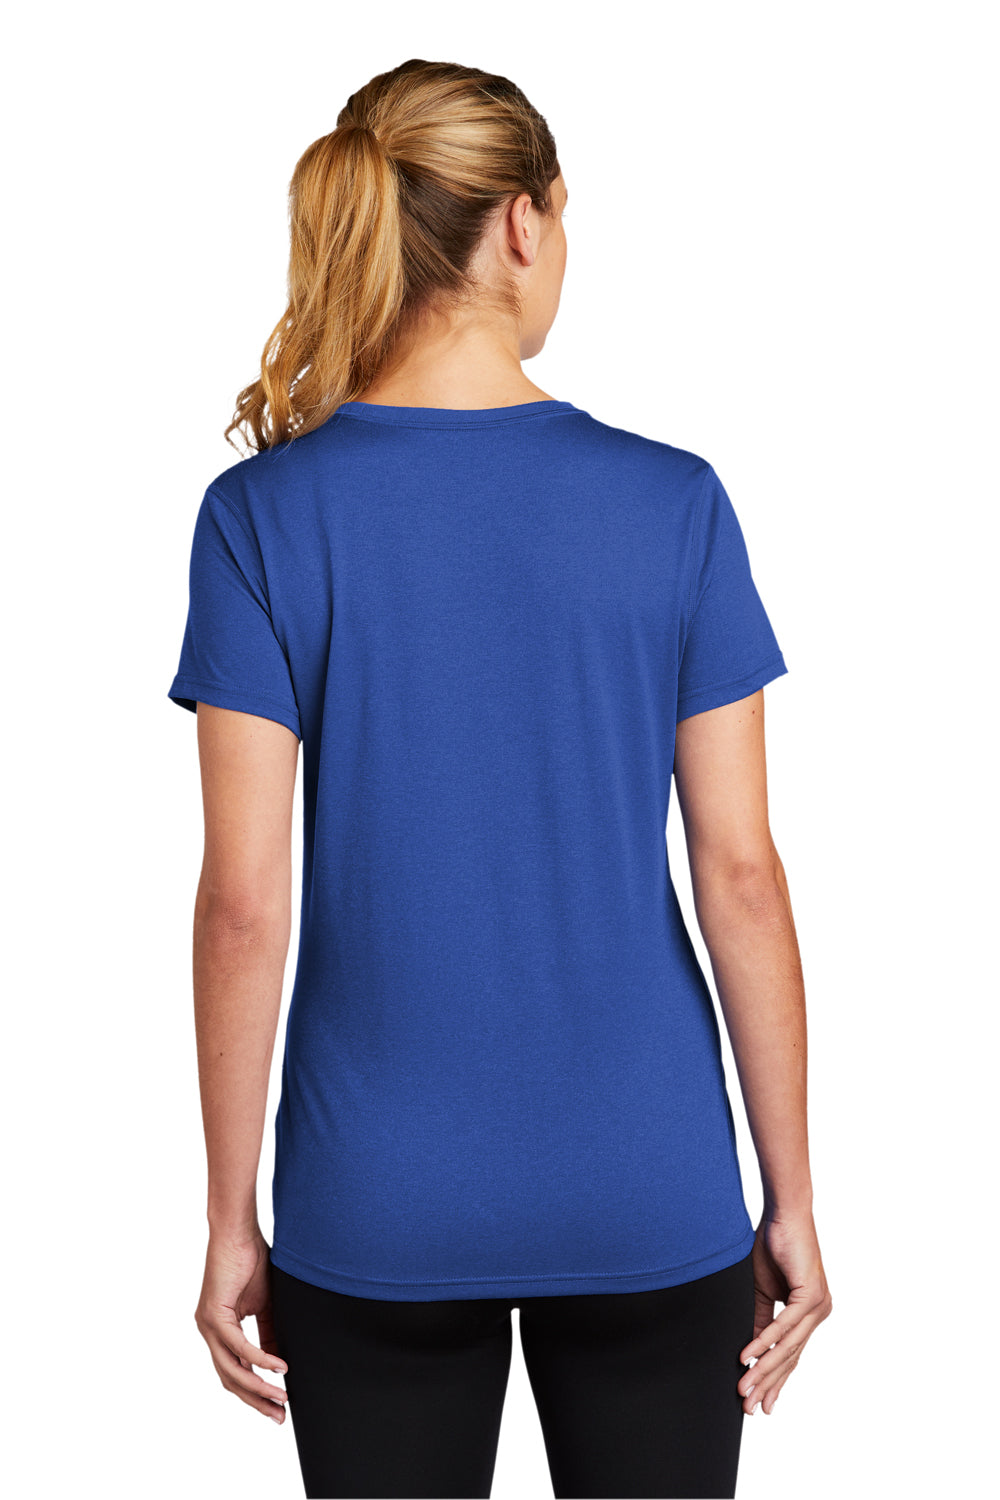 Nike Womens Legend Short Sleeve Crewneck T-Shirt Game Royal Blue Side